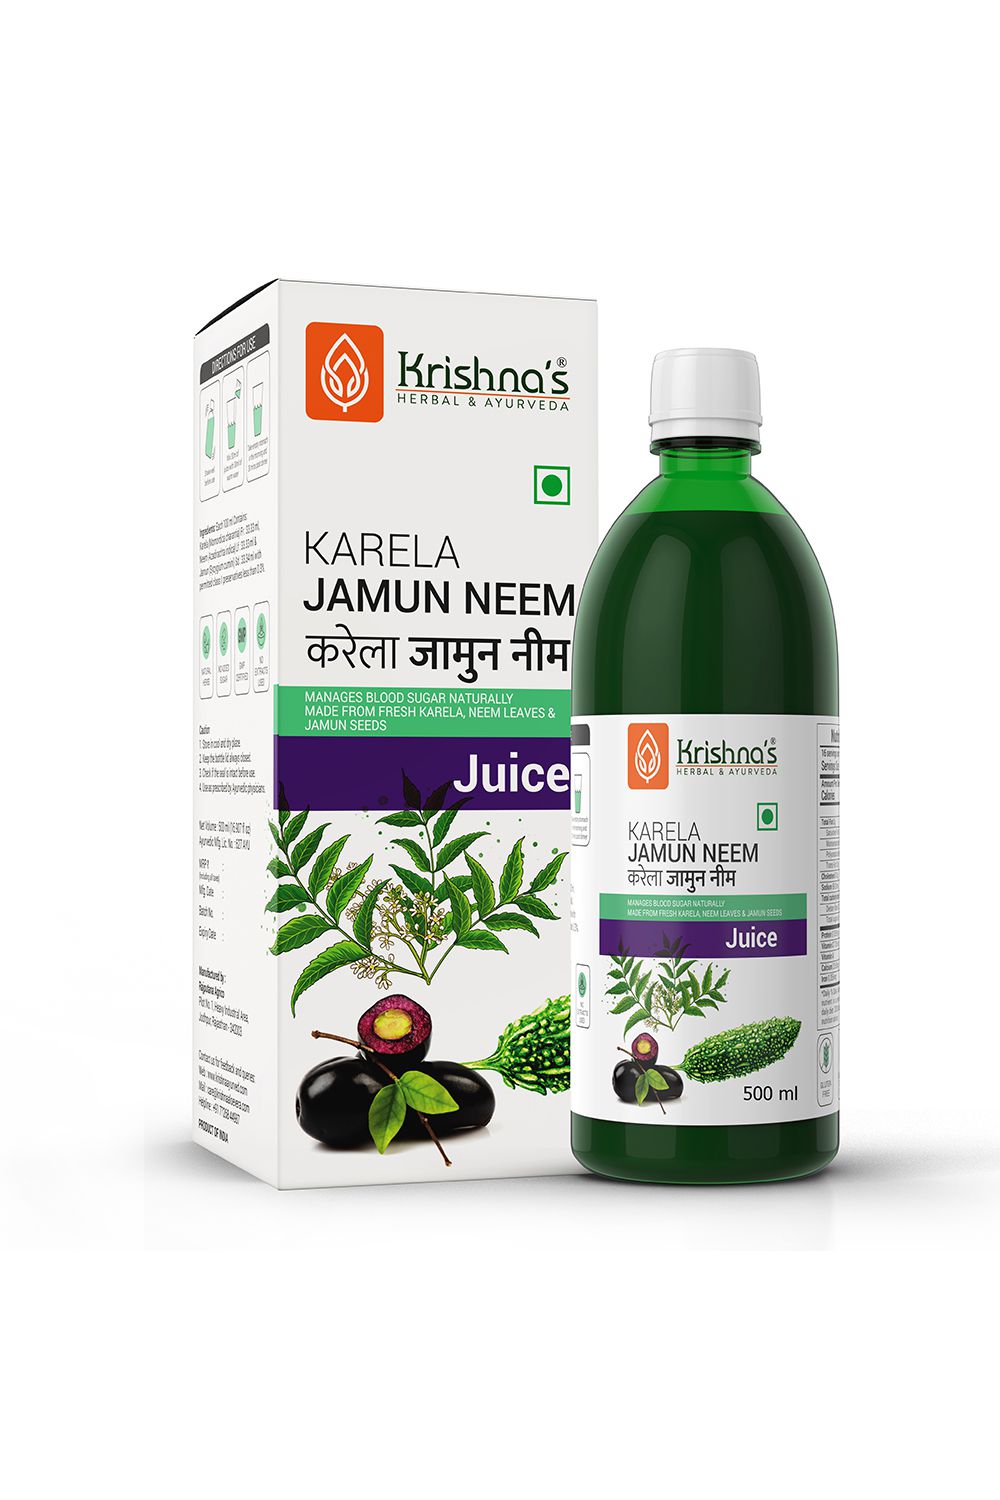     			Krishna's Herbal & Ayurveda Karela Jamun Neem Juice 500ml